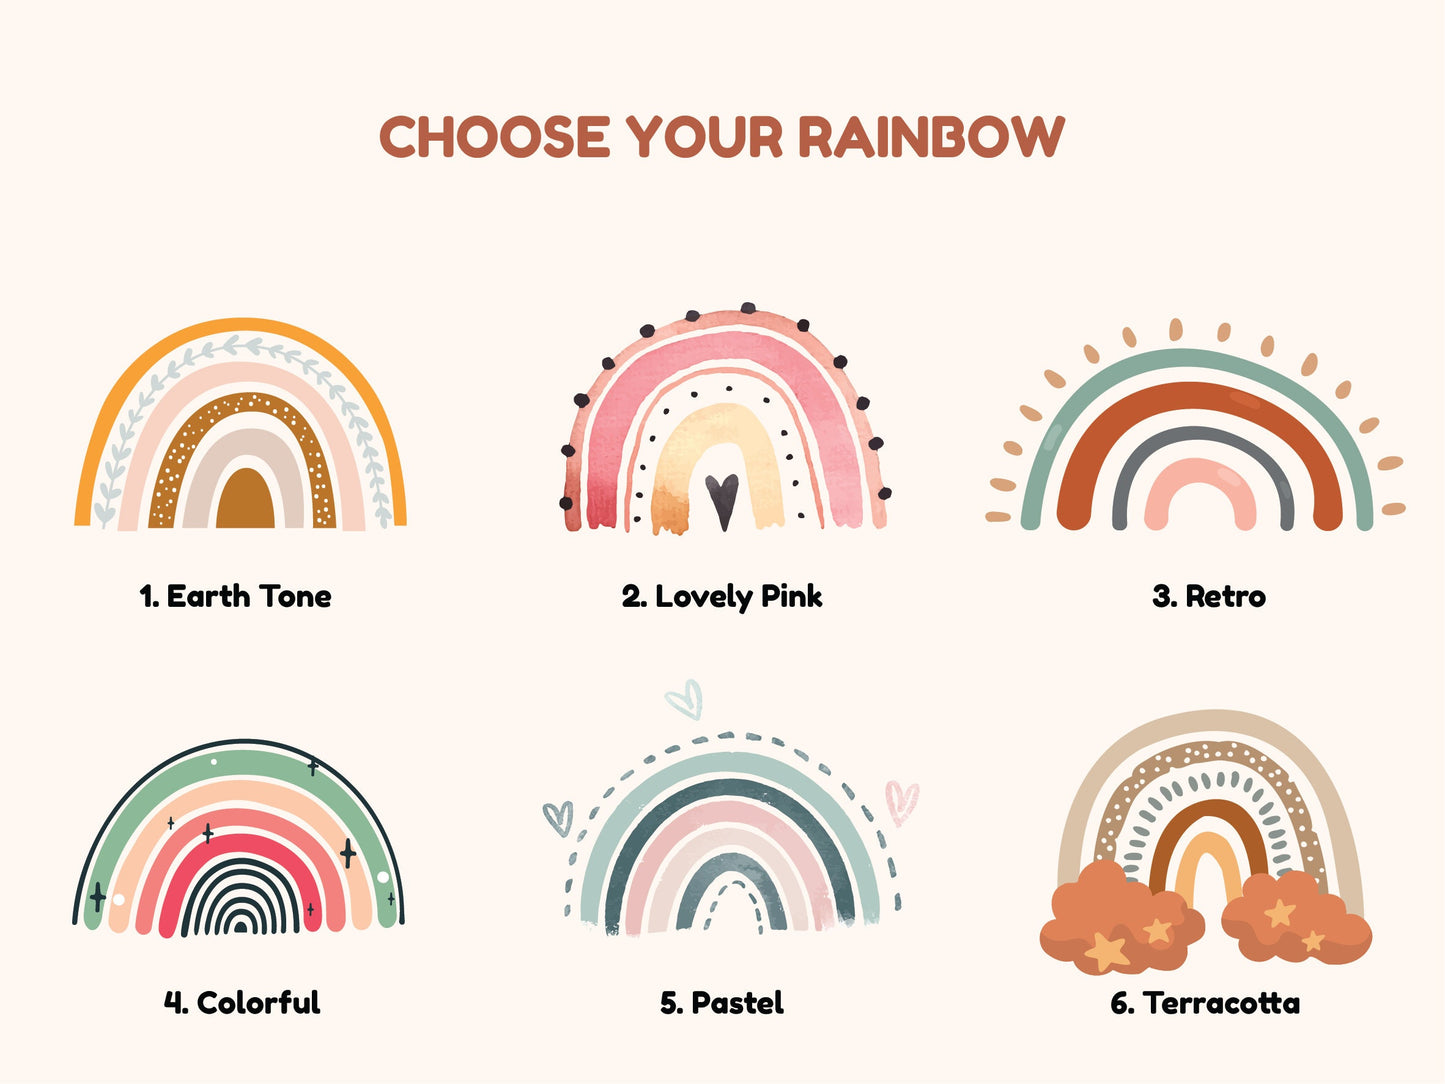 Book Bag - Terracotta Rainbow